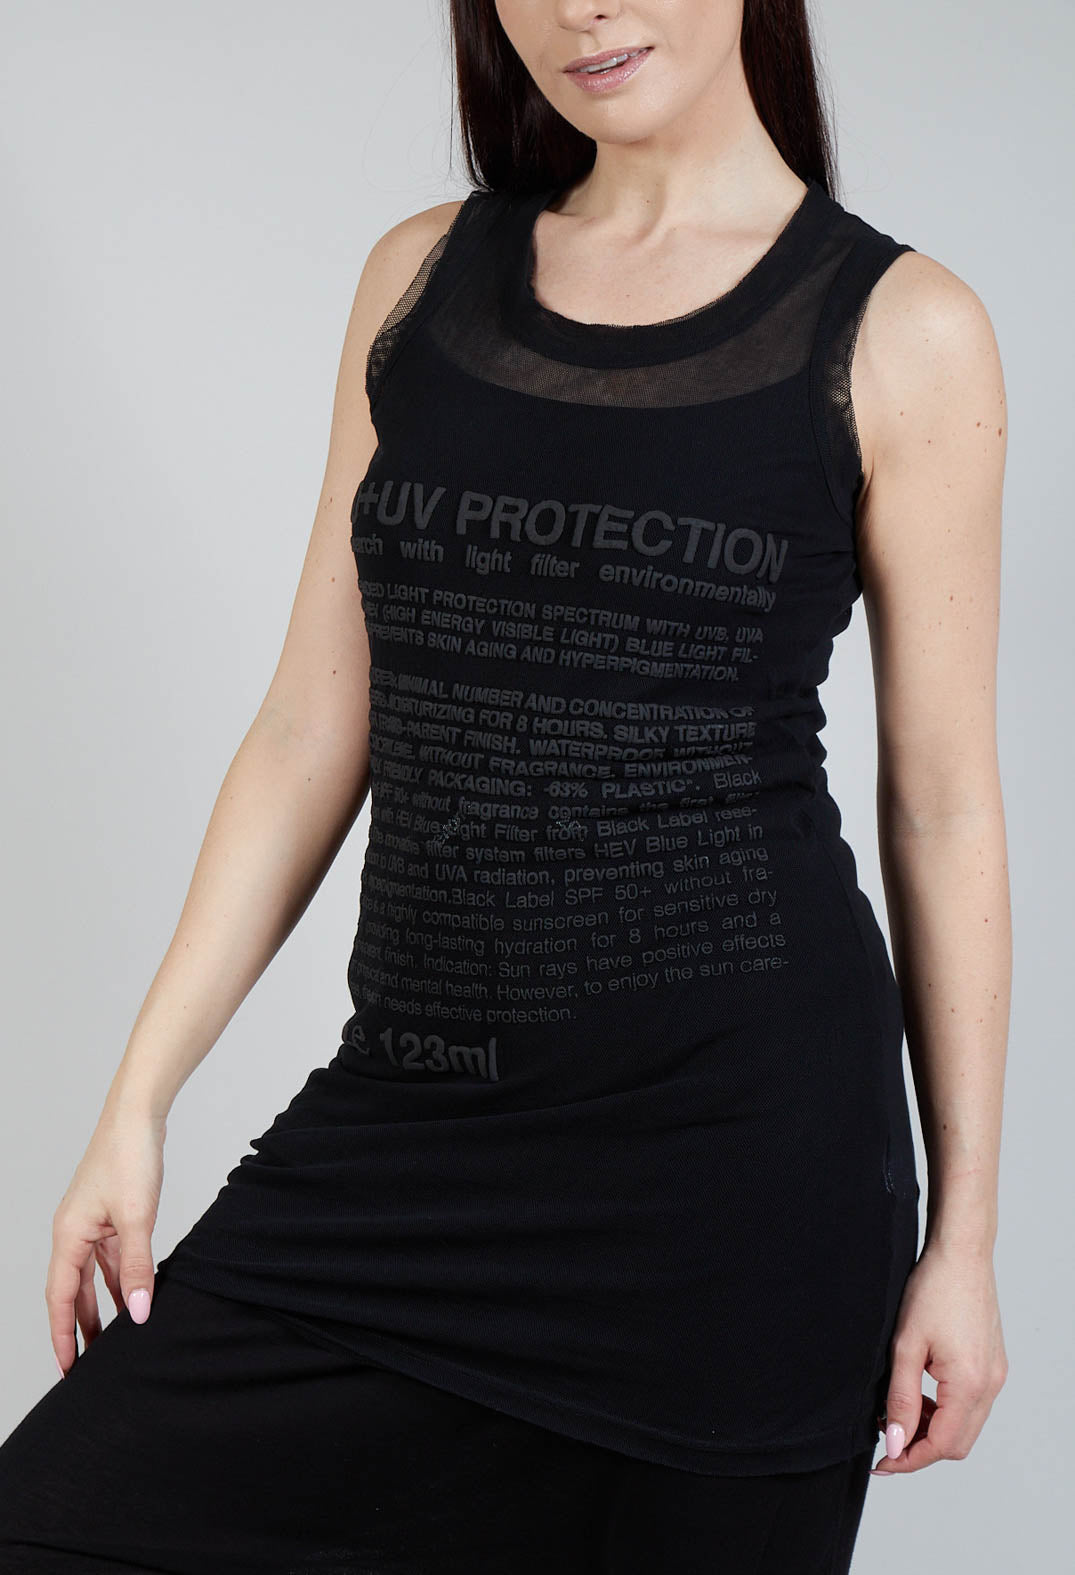 Vest Top with Lettering Motif in Black Print